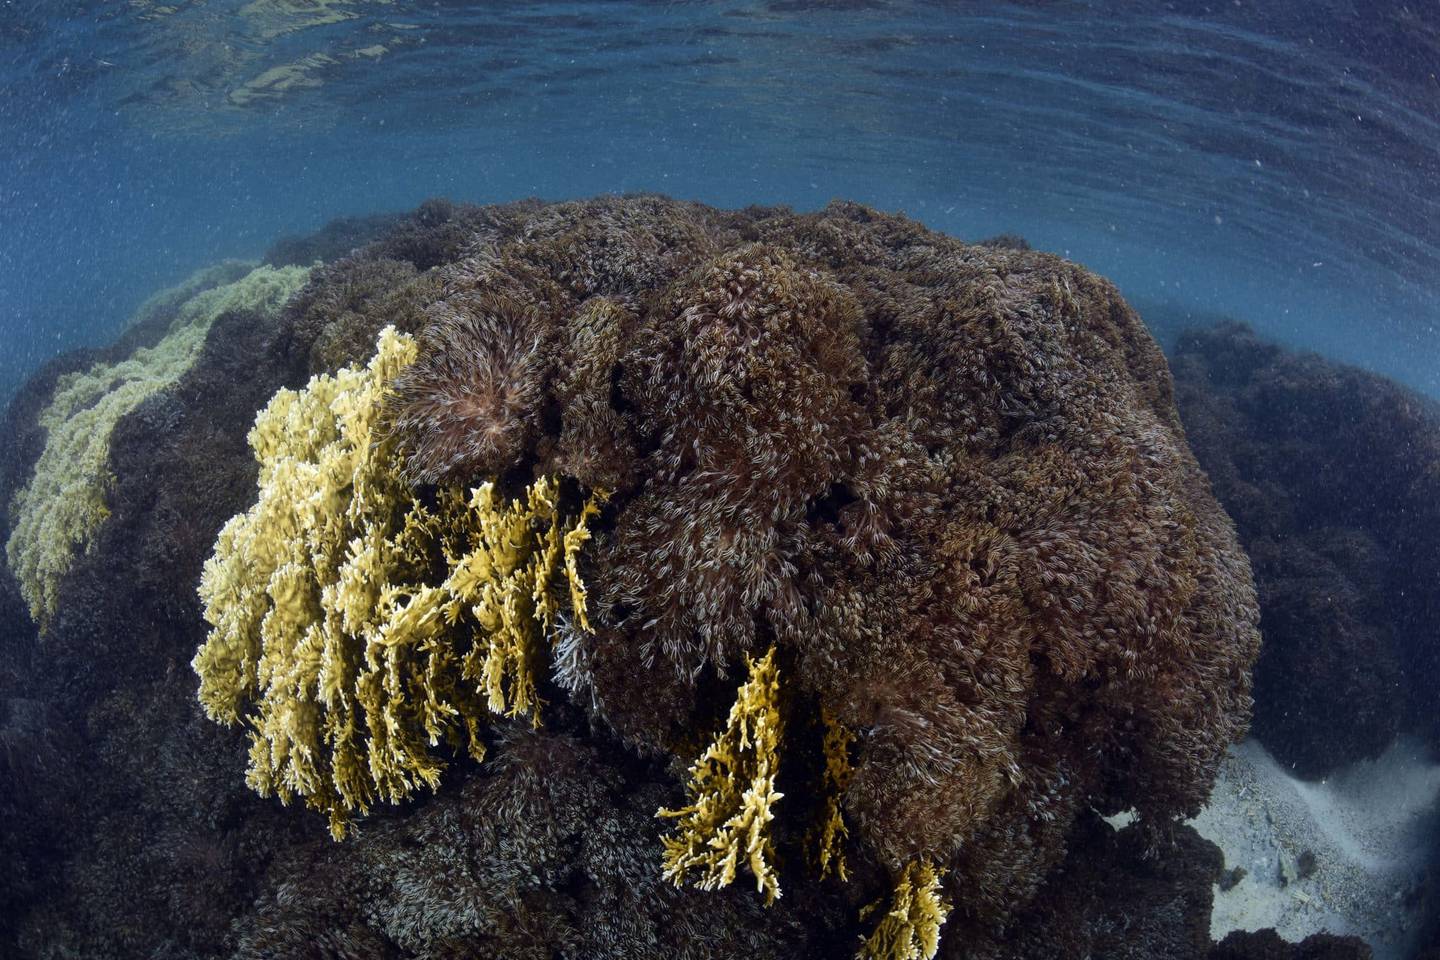 Unomia Coral puts Venezuelan coastline at risk.